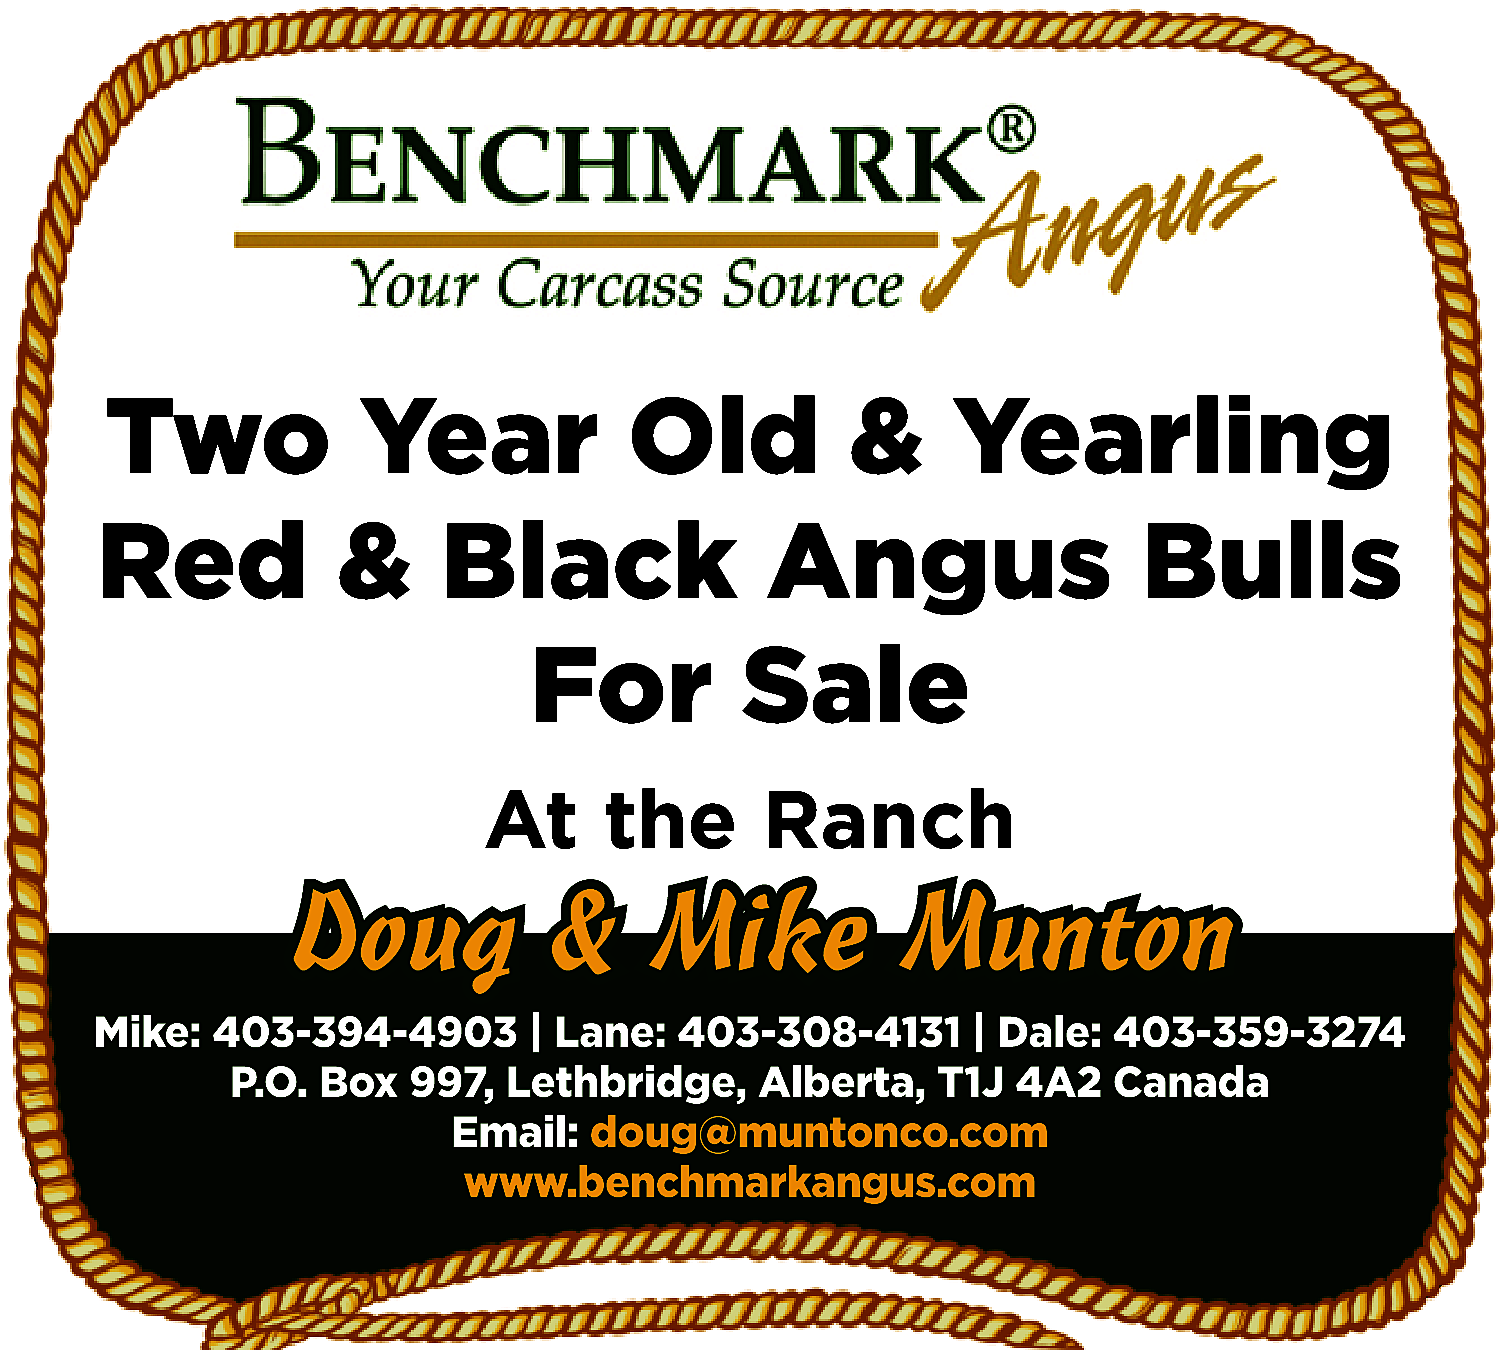 Two Year Old & Yearling  Two Year Old & Yearling  Red & Black Angus Bulls  For Sale  At the Ranch  Mike: 403-394-4903 | Lane: 403-308-4131 | Dale: 403-359-3274  P.O. Box 997, Lethbridge, Alberta, T1J 4A2 Canada  Email: doug@muntonco.com  www.benchmarkangus.com    